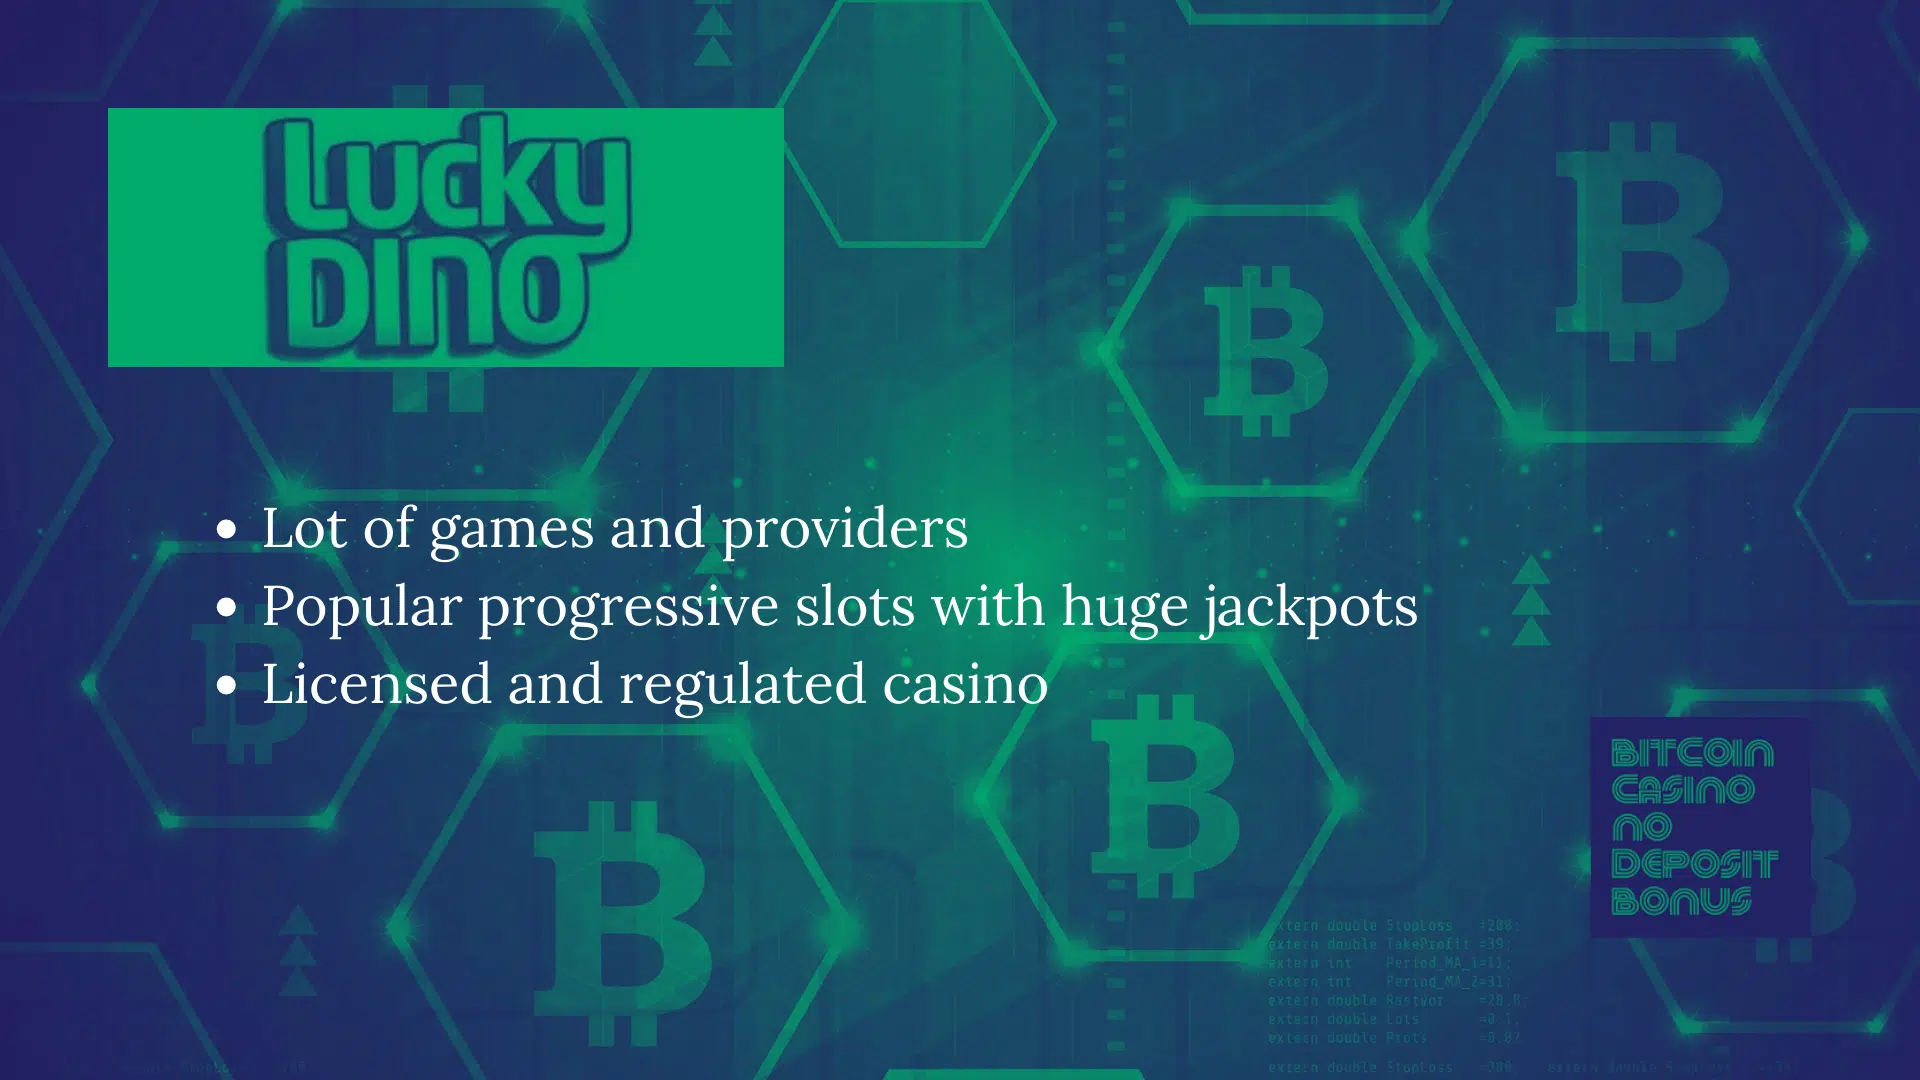 You are currently viewing LuckyDino Casino No Deposit Bonus – Luckydino.com Free Spins December 2022